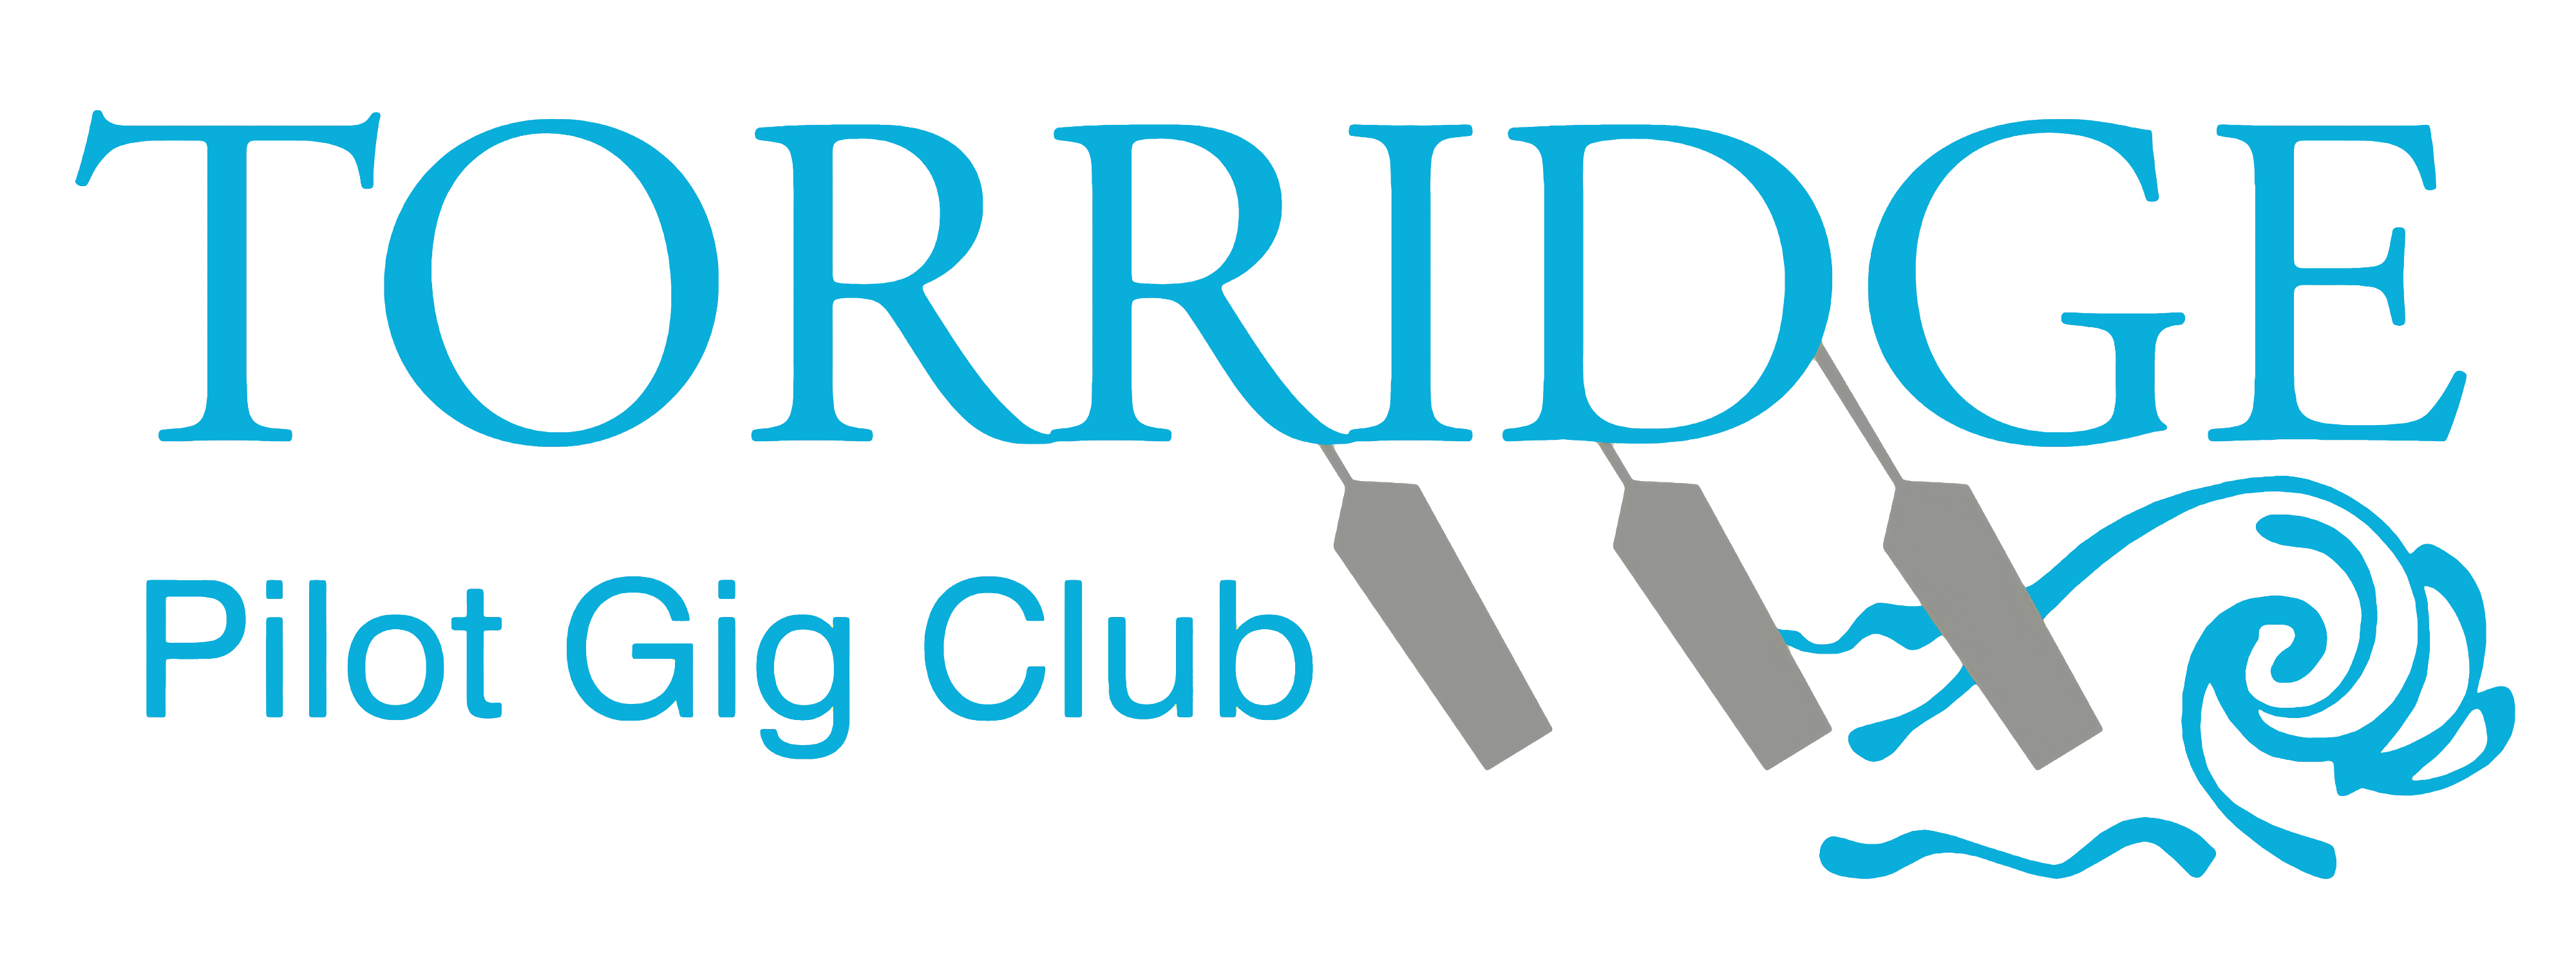 Torridge Pilot Gig Club Logo